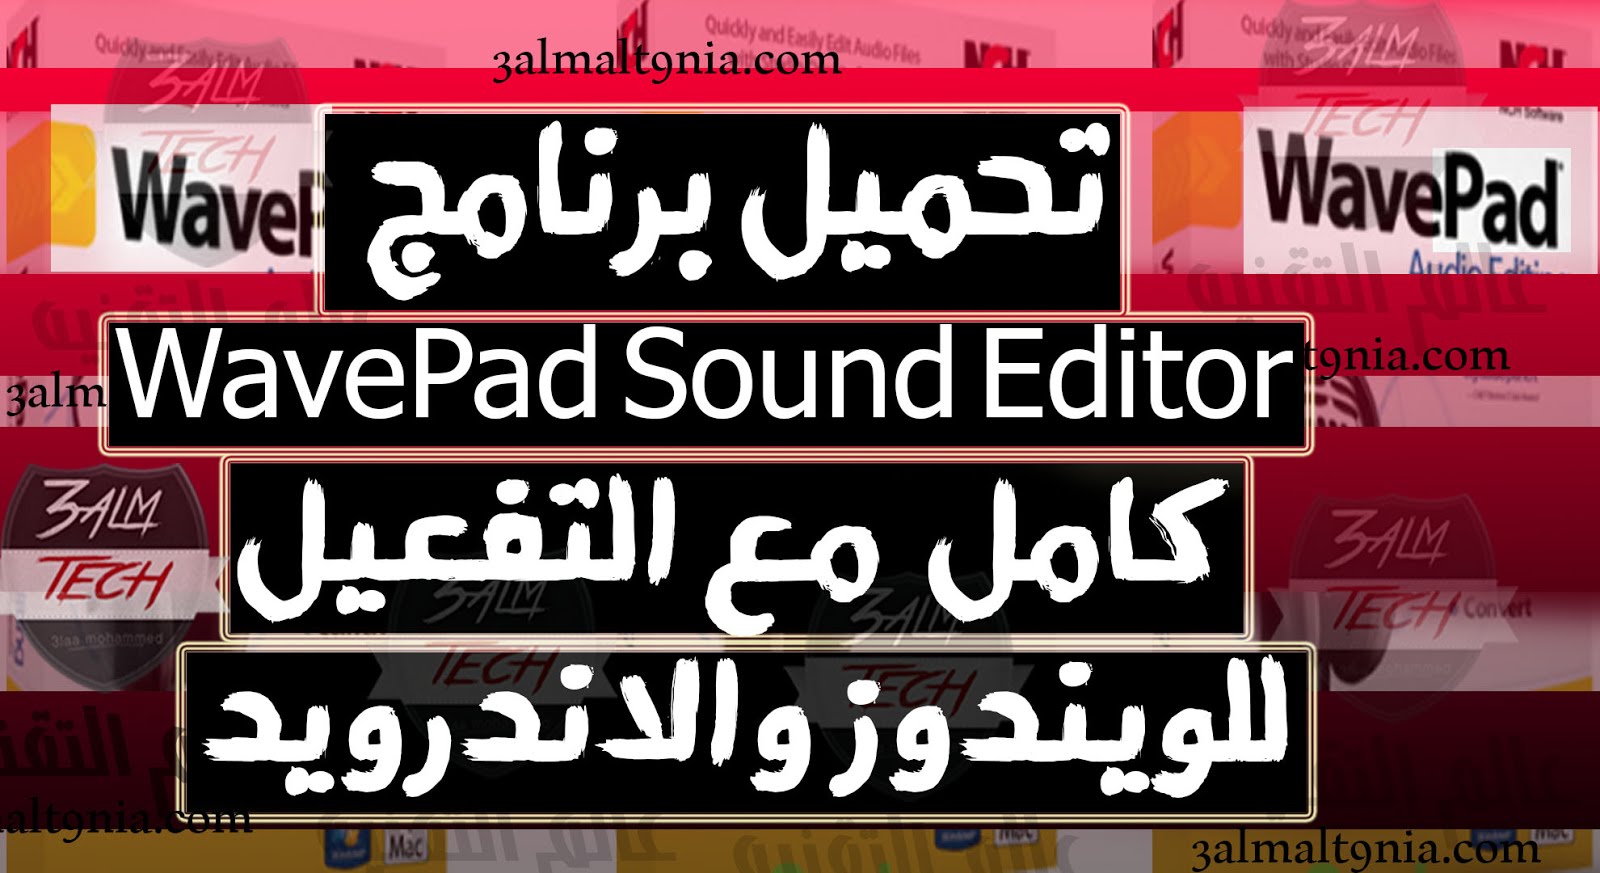 wavepad sound editor 2013